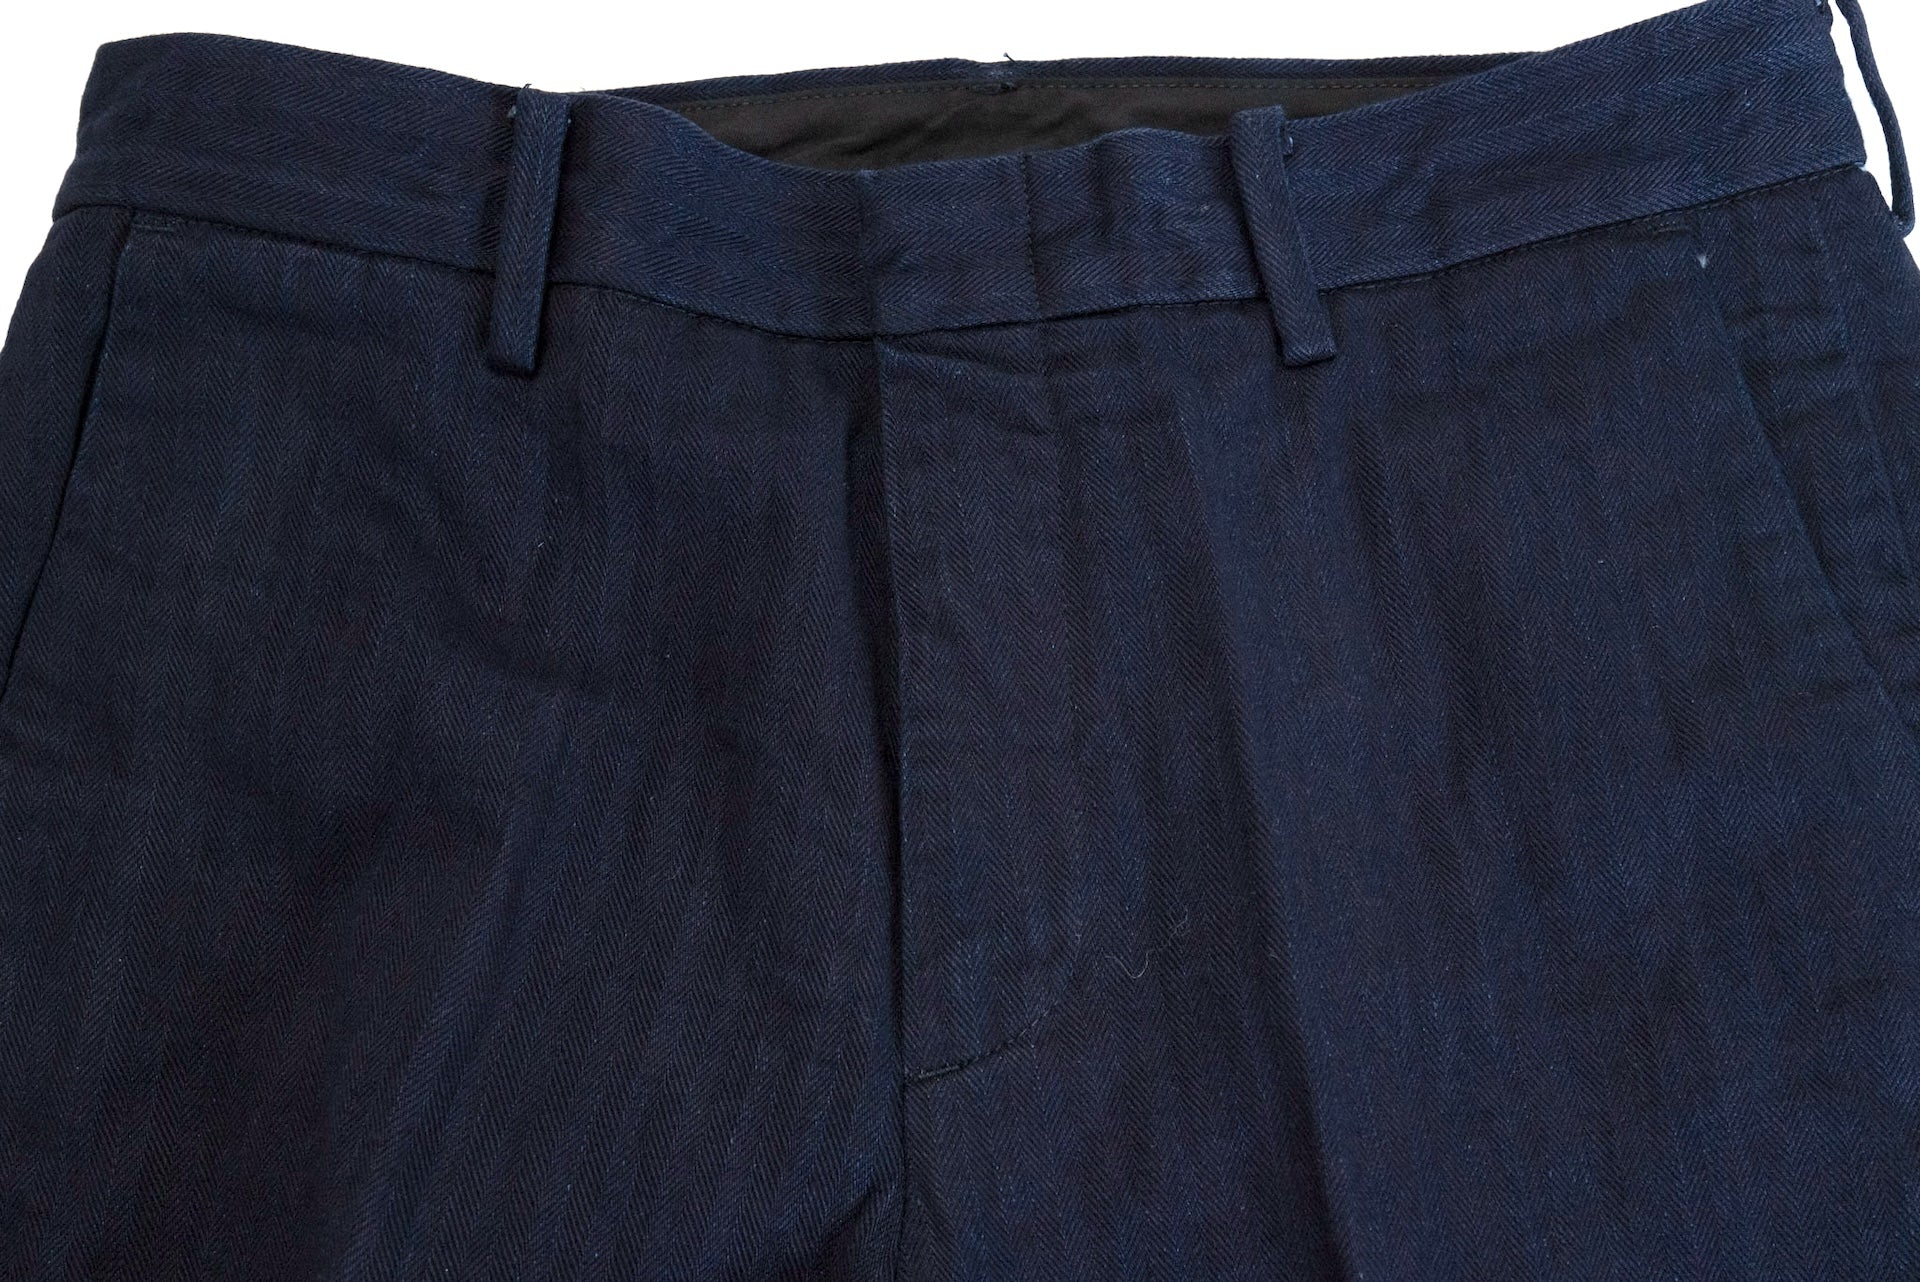 Momotaro 12oz "Supima Cotton" Herringbone Twill Tailored Trousers (Indigo)